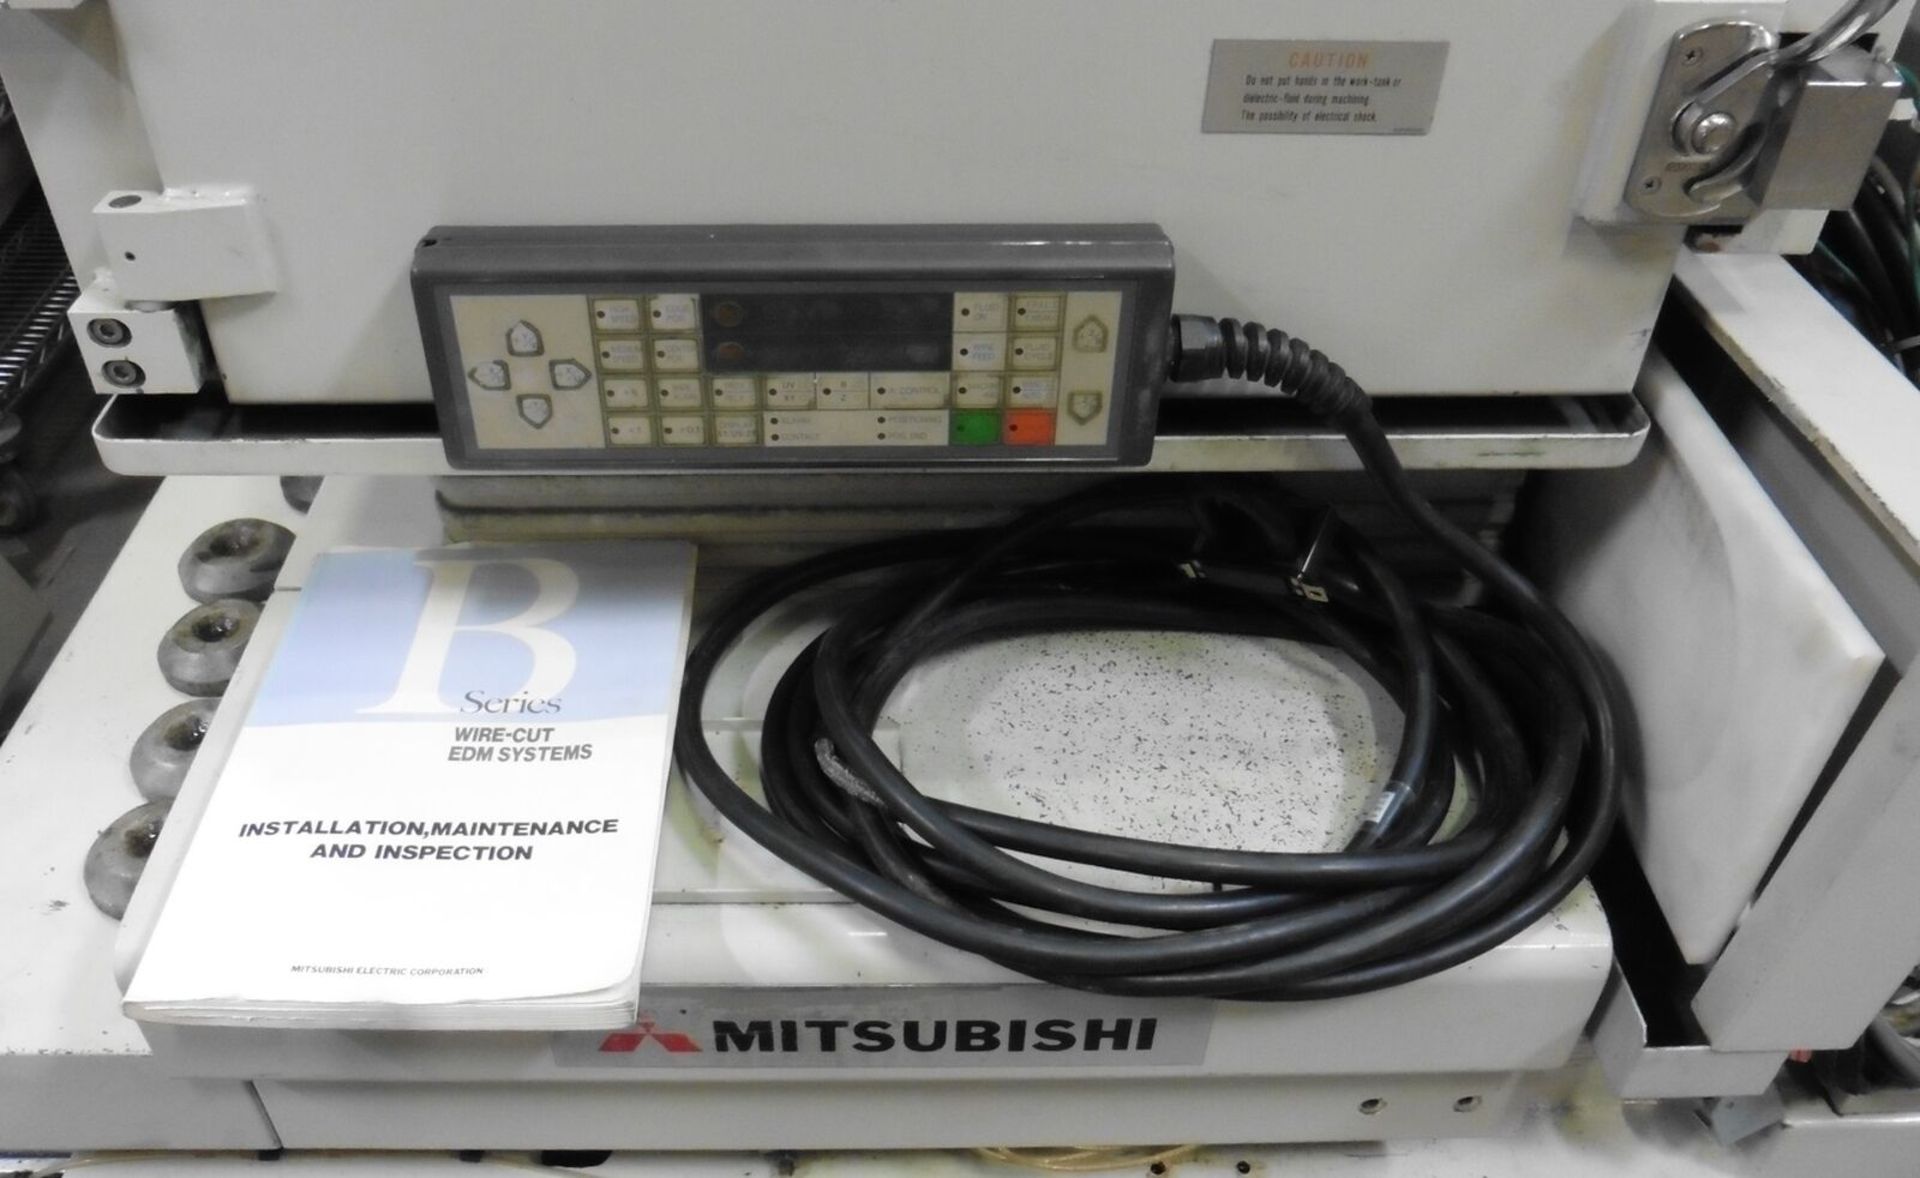 Mitsubishi DWC90SB Electrical Discharge Machine CNC Wire EDM - Image 4 of 12